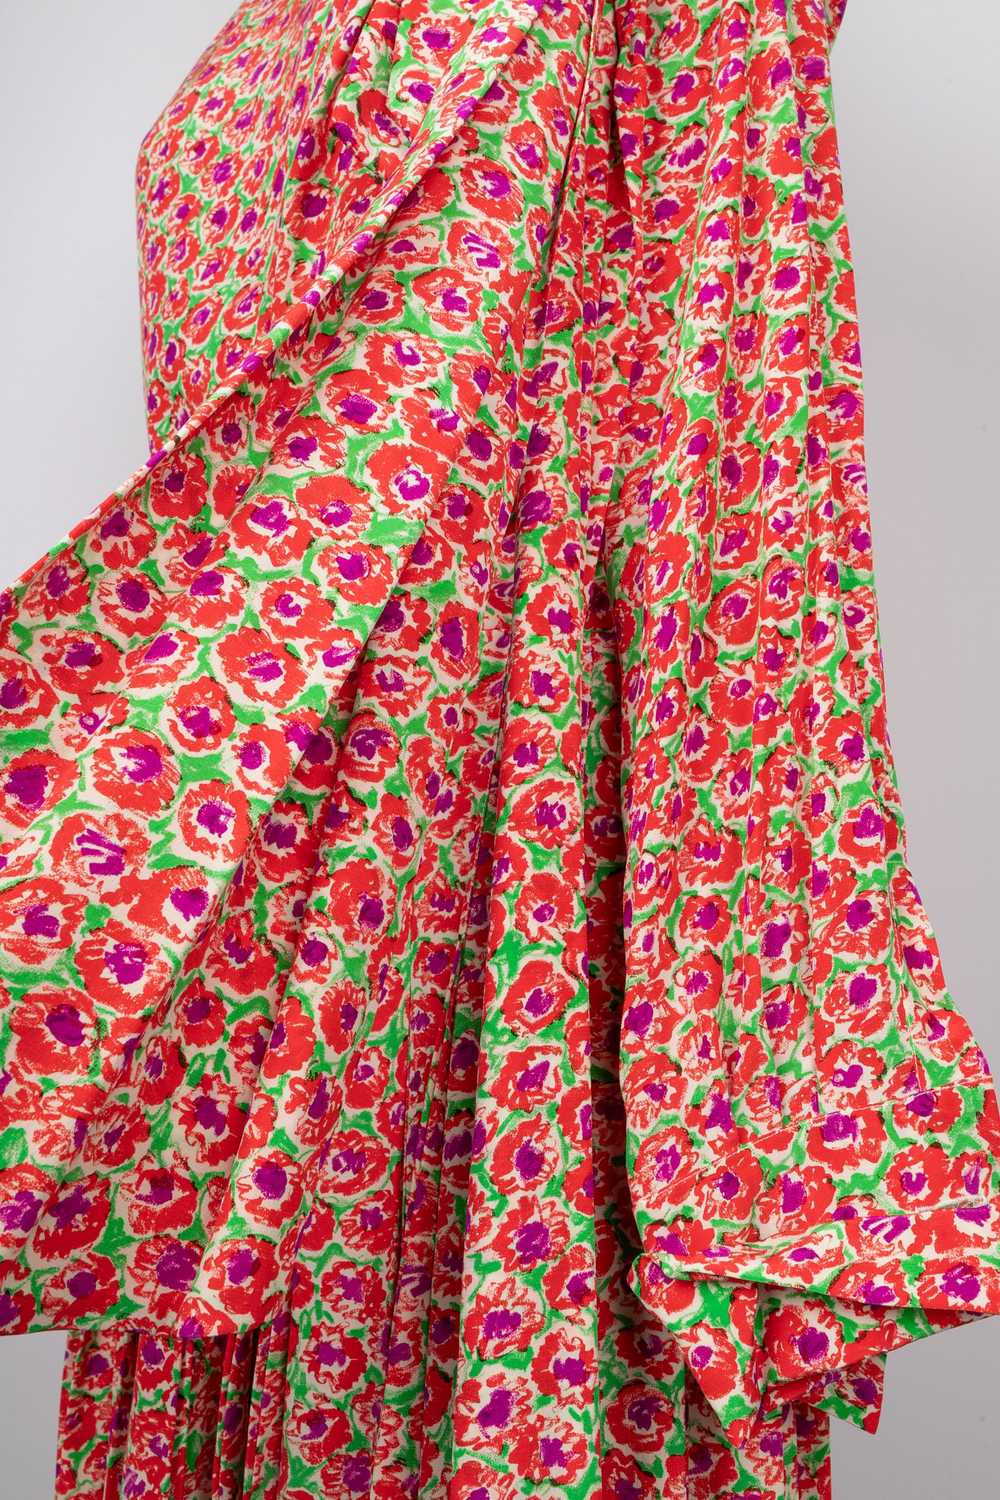 Yves Saint Laurent silk dress 1989 - image 6